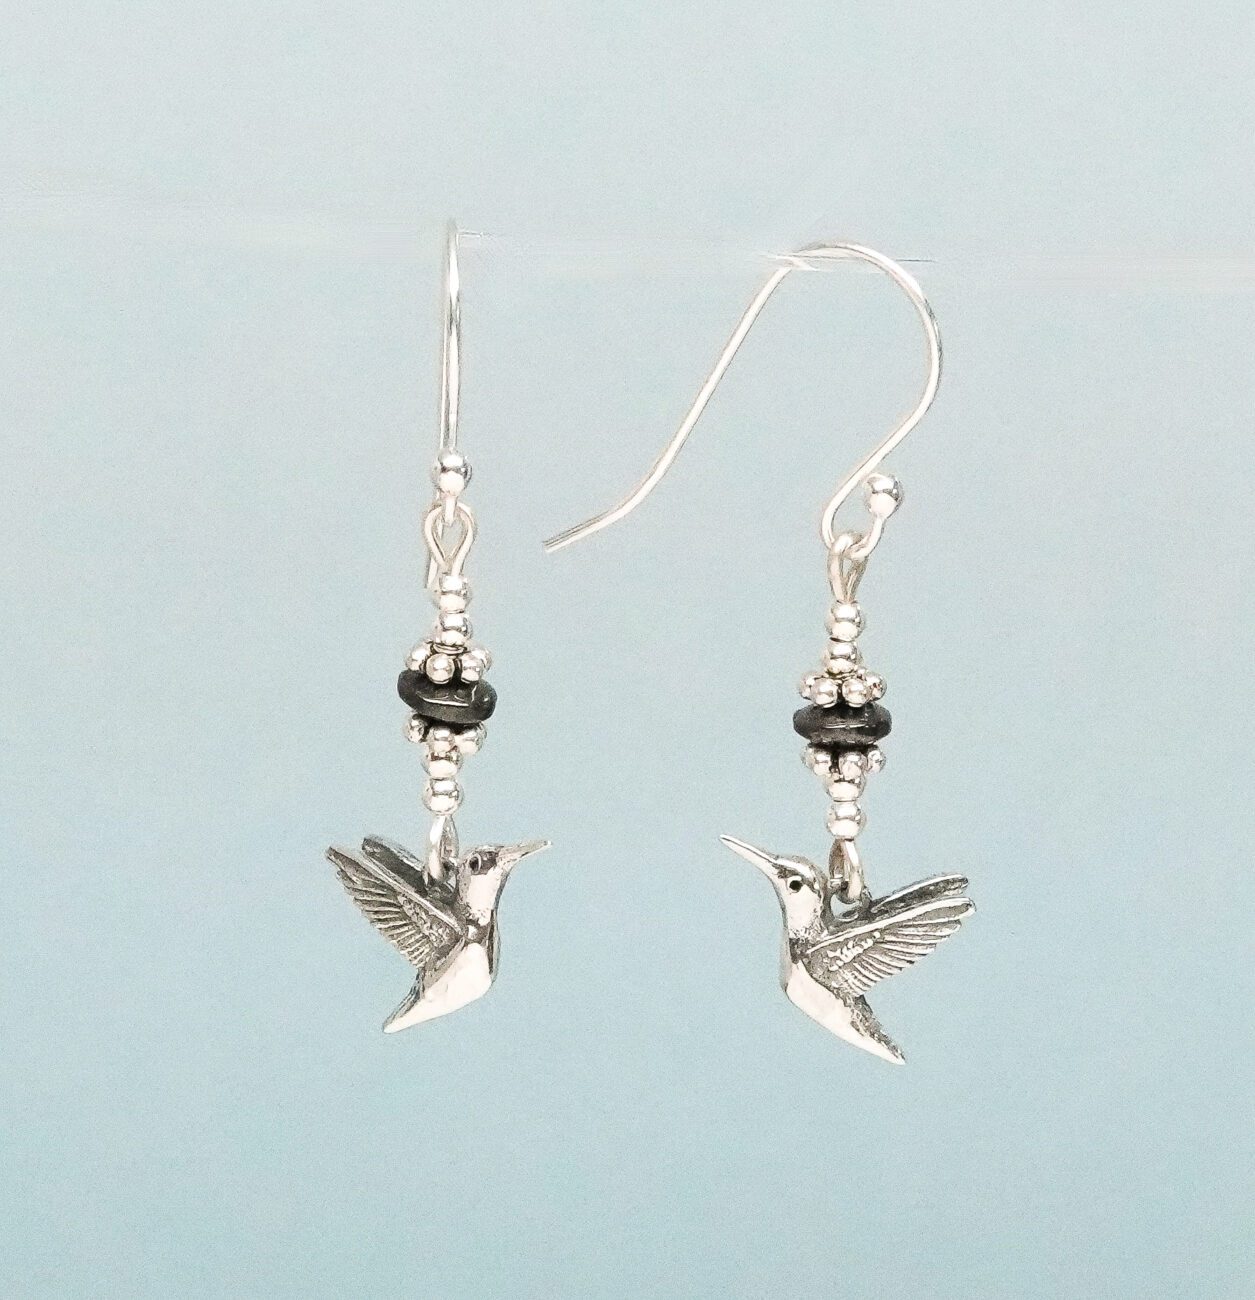 Tiny Hummingbirds » Dreamscape Jewelry Design